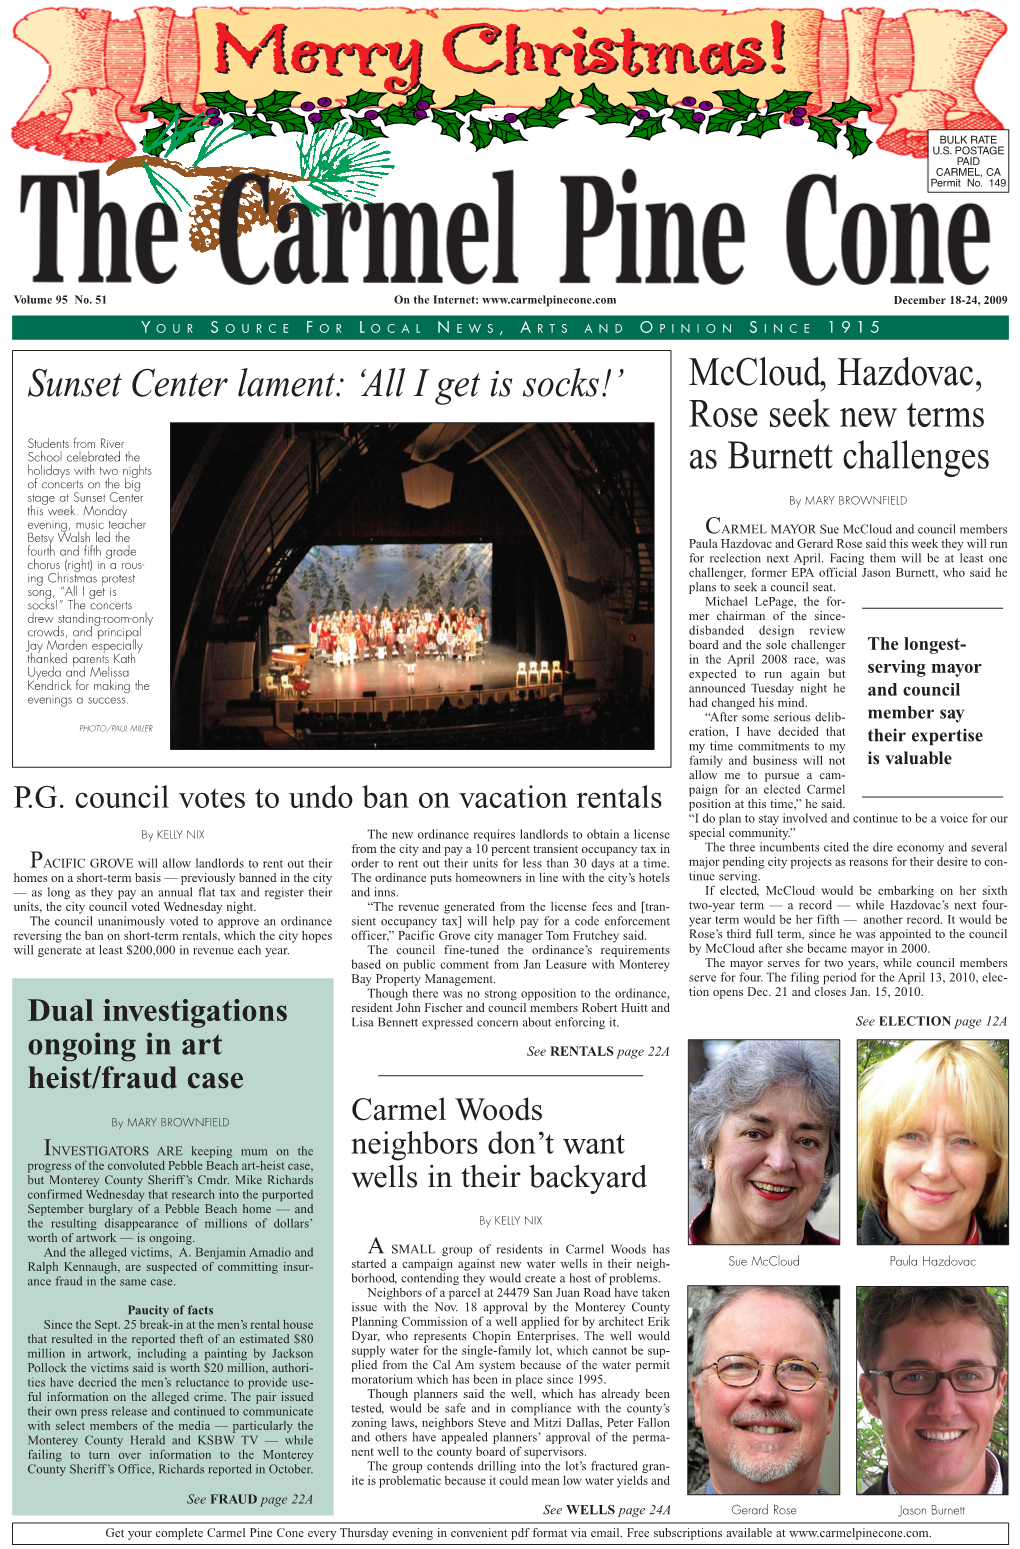 Carmel Pine Cone, December 18, 2009 (Main News)